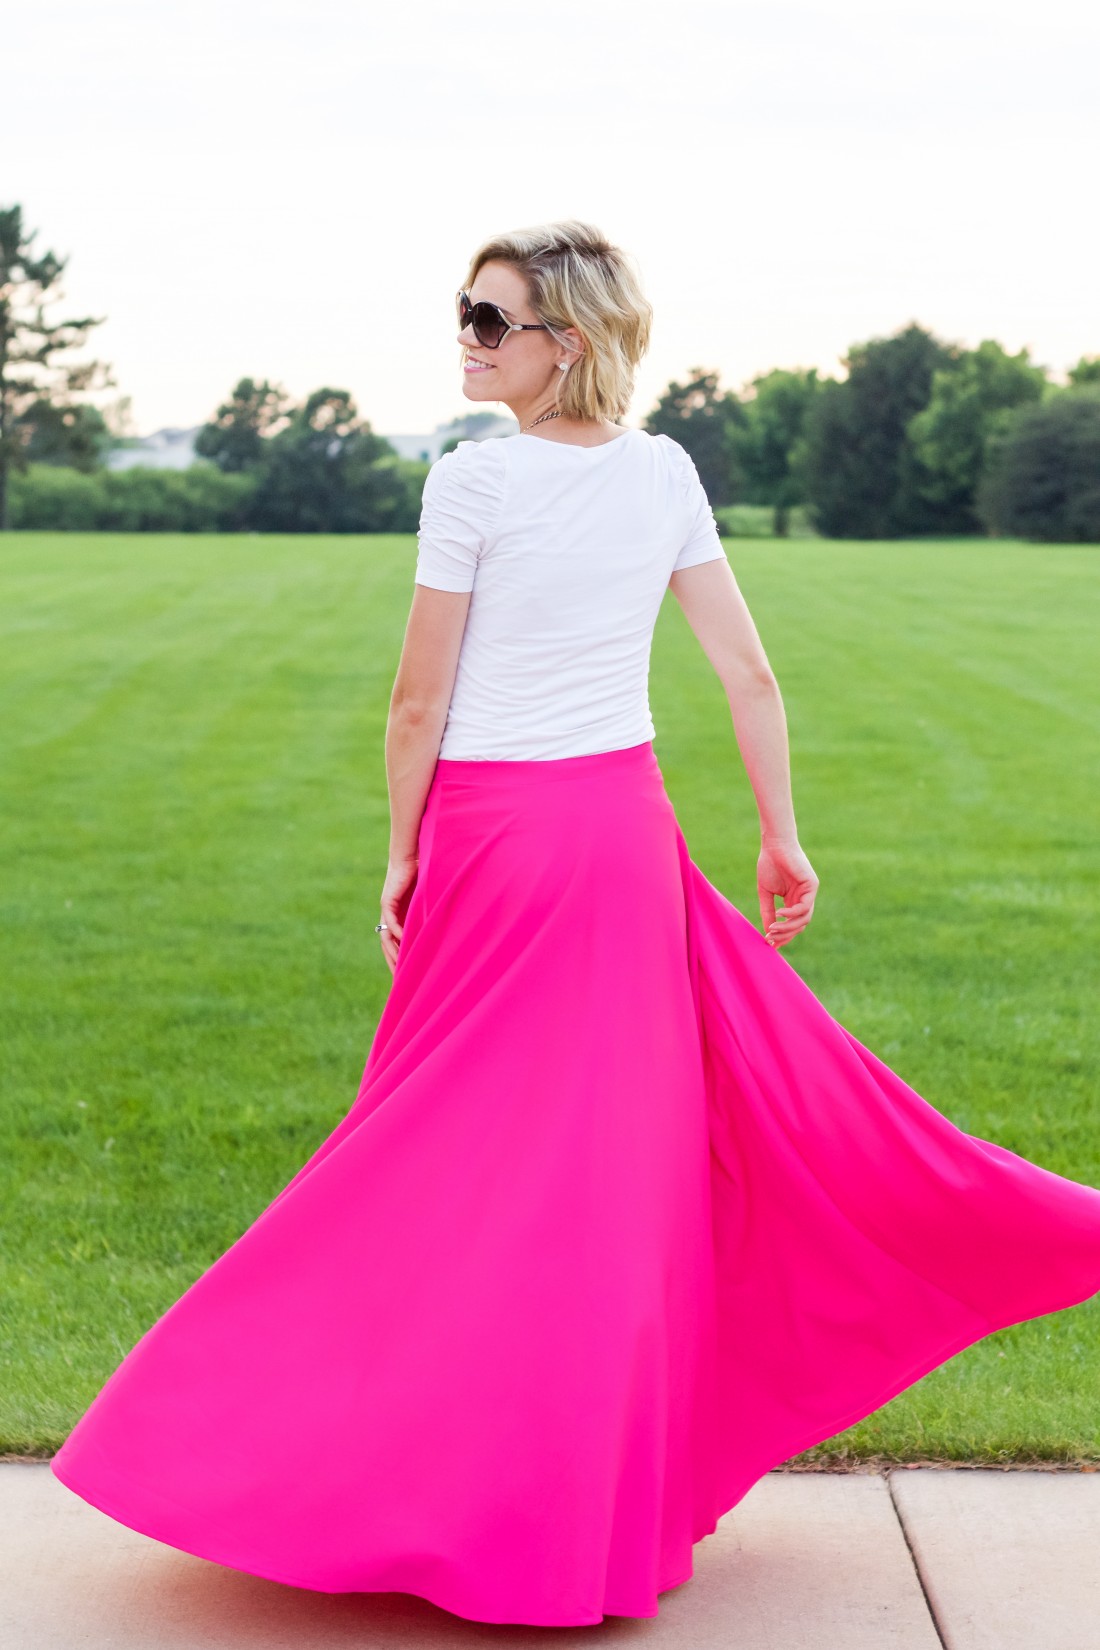 Bright Skirts For Any Season - Embellishmints